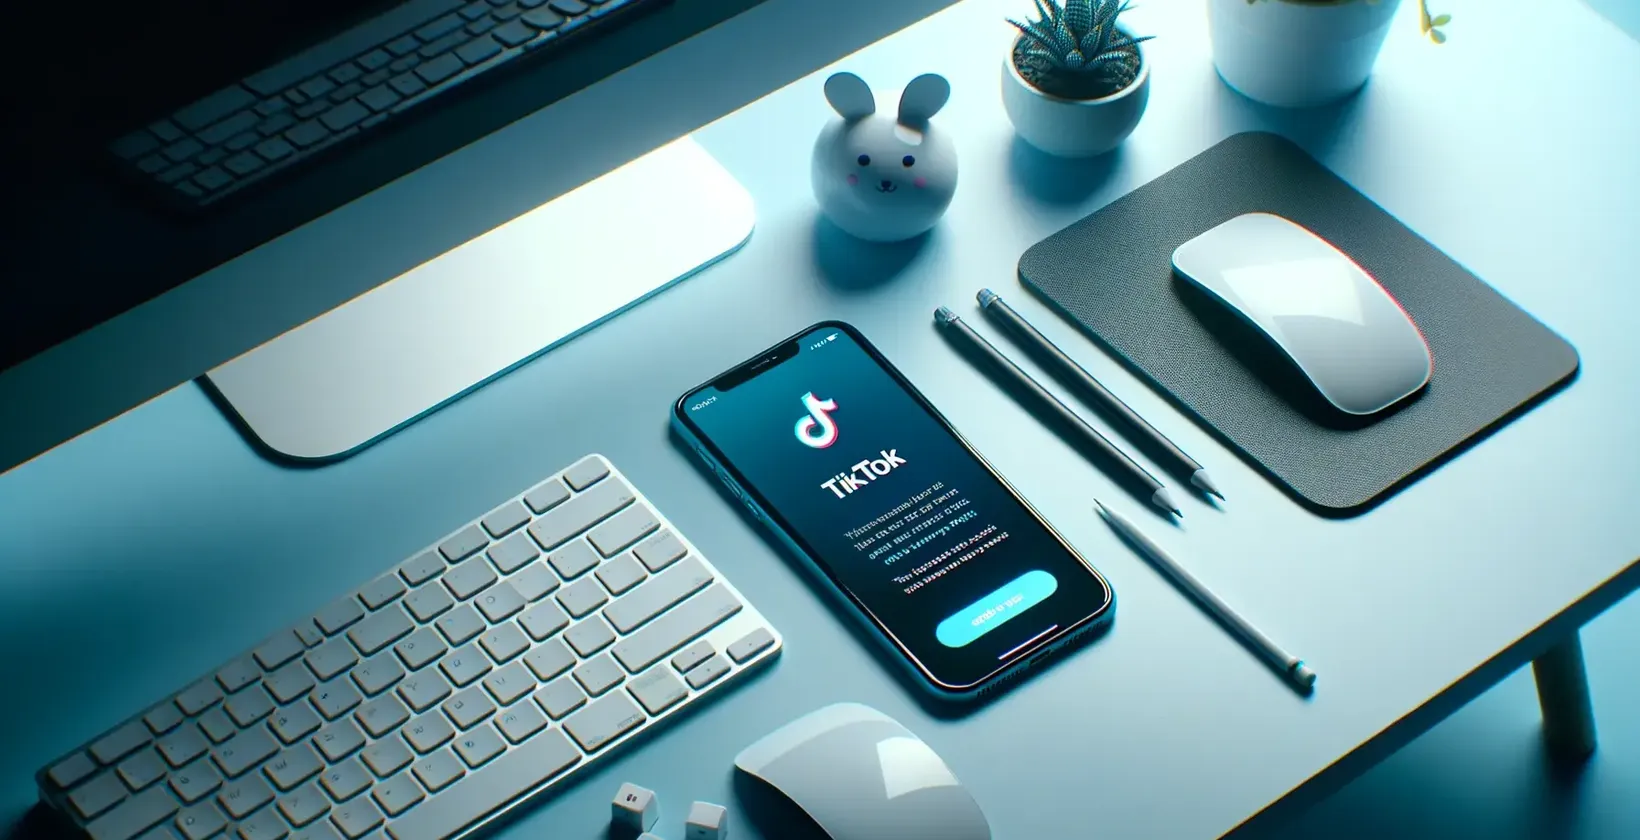 Smartphone με ανοιχτή την εφαρμογή TikTok@, περιτριγυρισμένο από πληκτρολόγιο, ποντίκι και αντικείμενα επιφάνειας εργασίας σε ένα τραπέζι με μπλε φωτισμό.